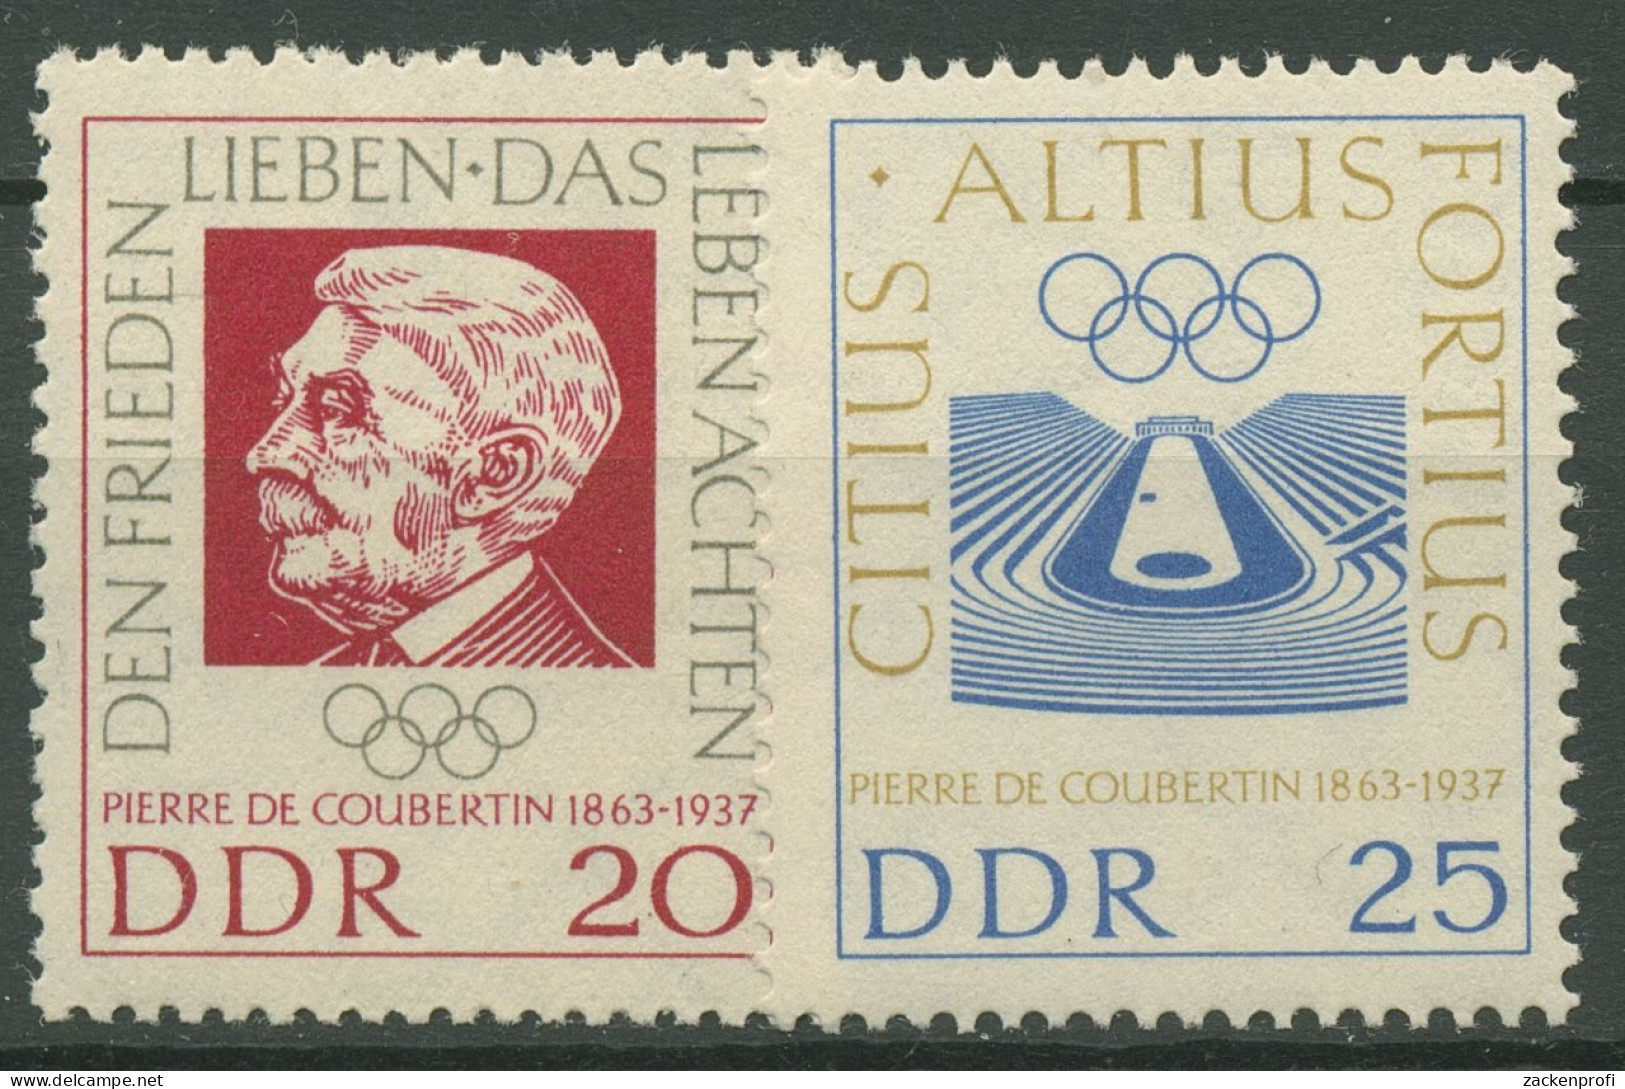 DDR 1963 Olympia Pierre De Coubertin 939/40 Postfrisch - Unused Stamps